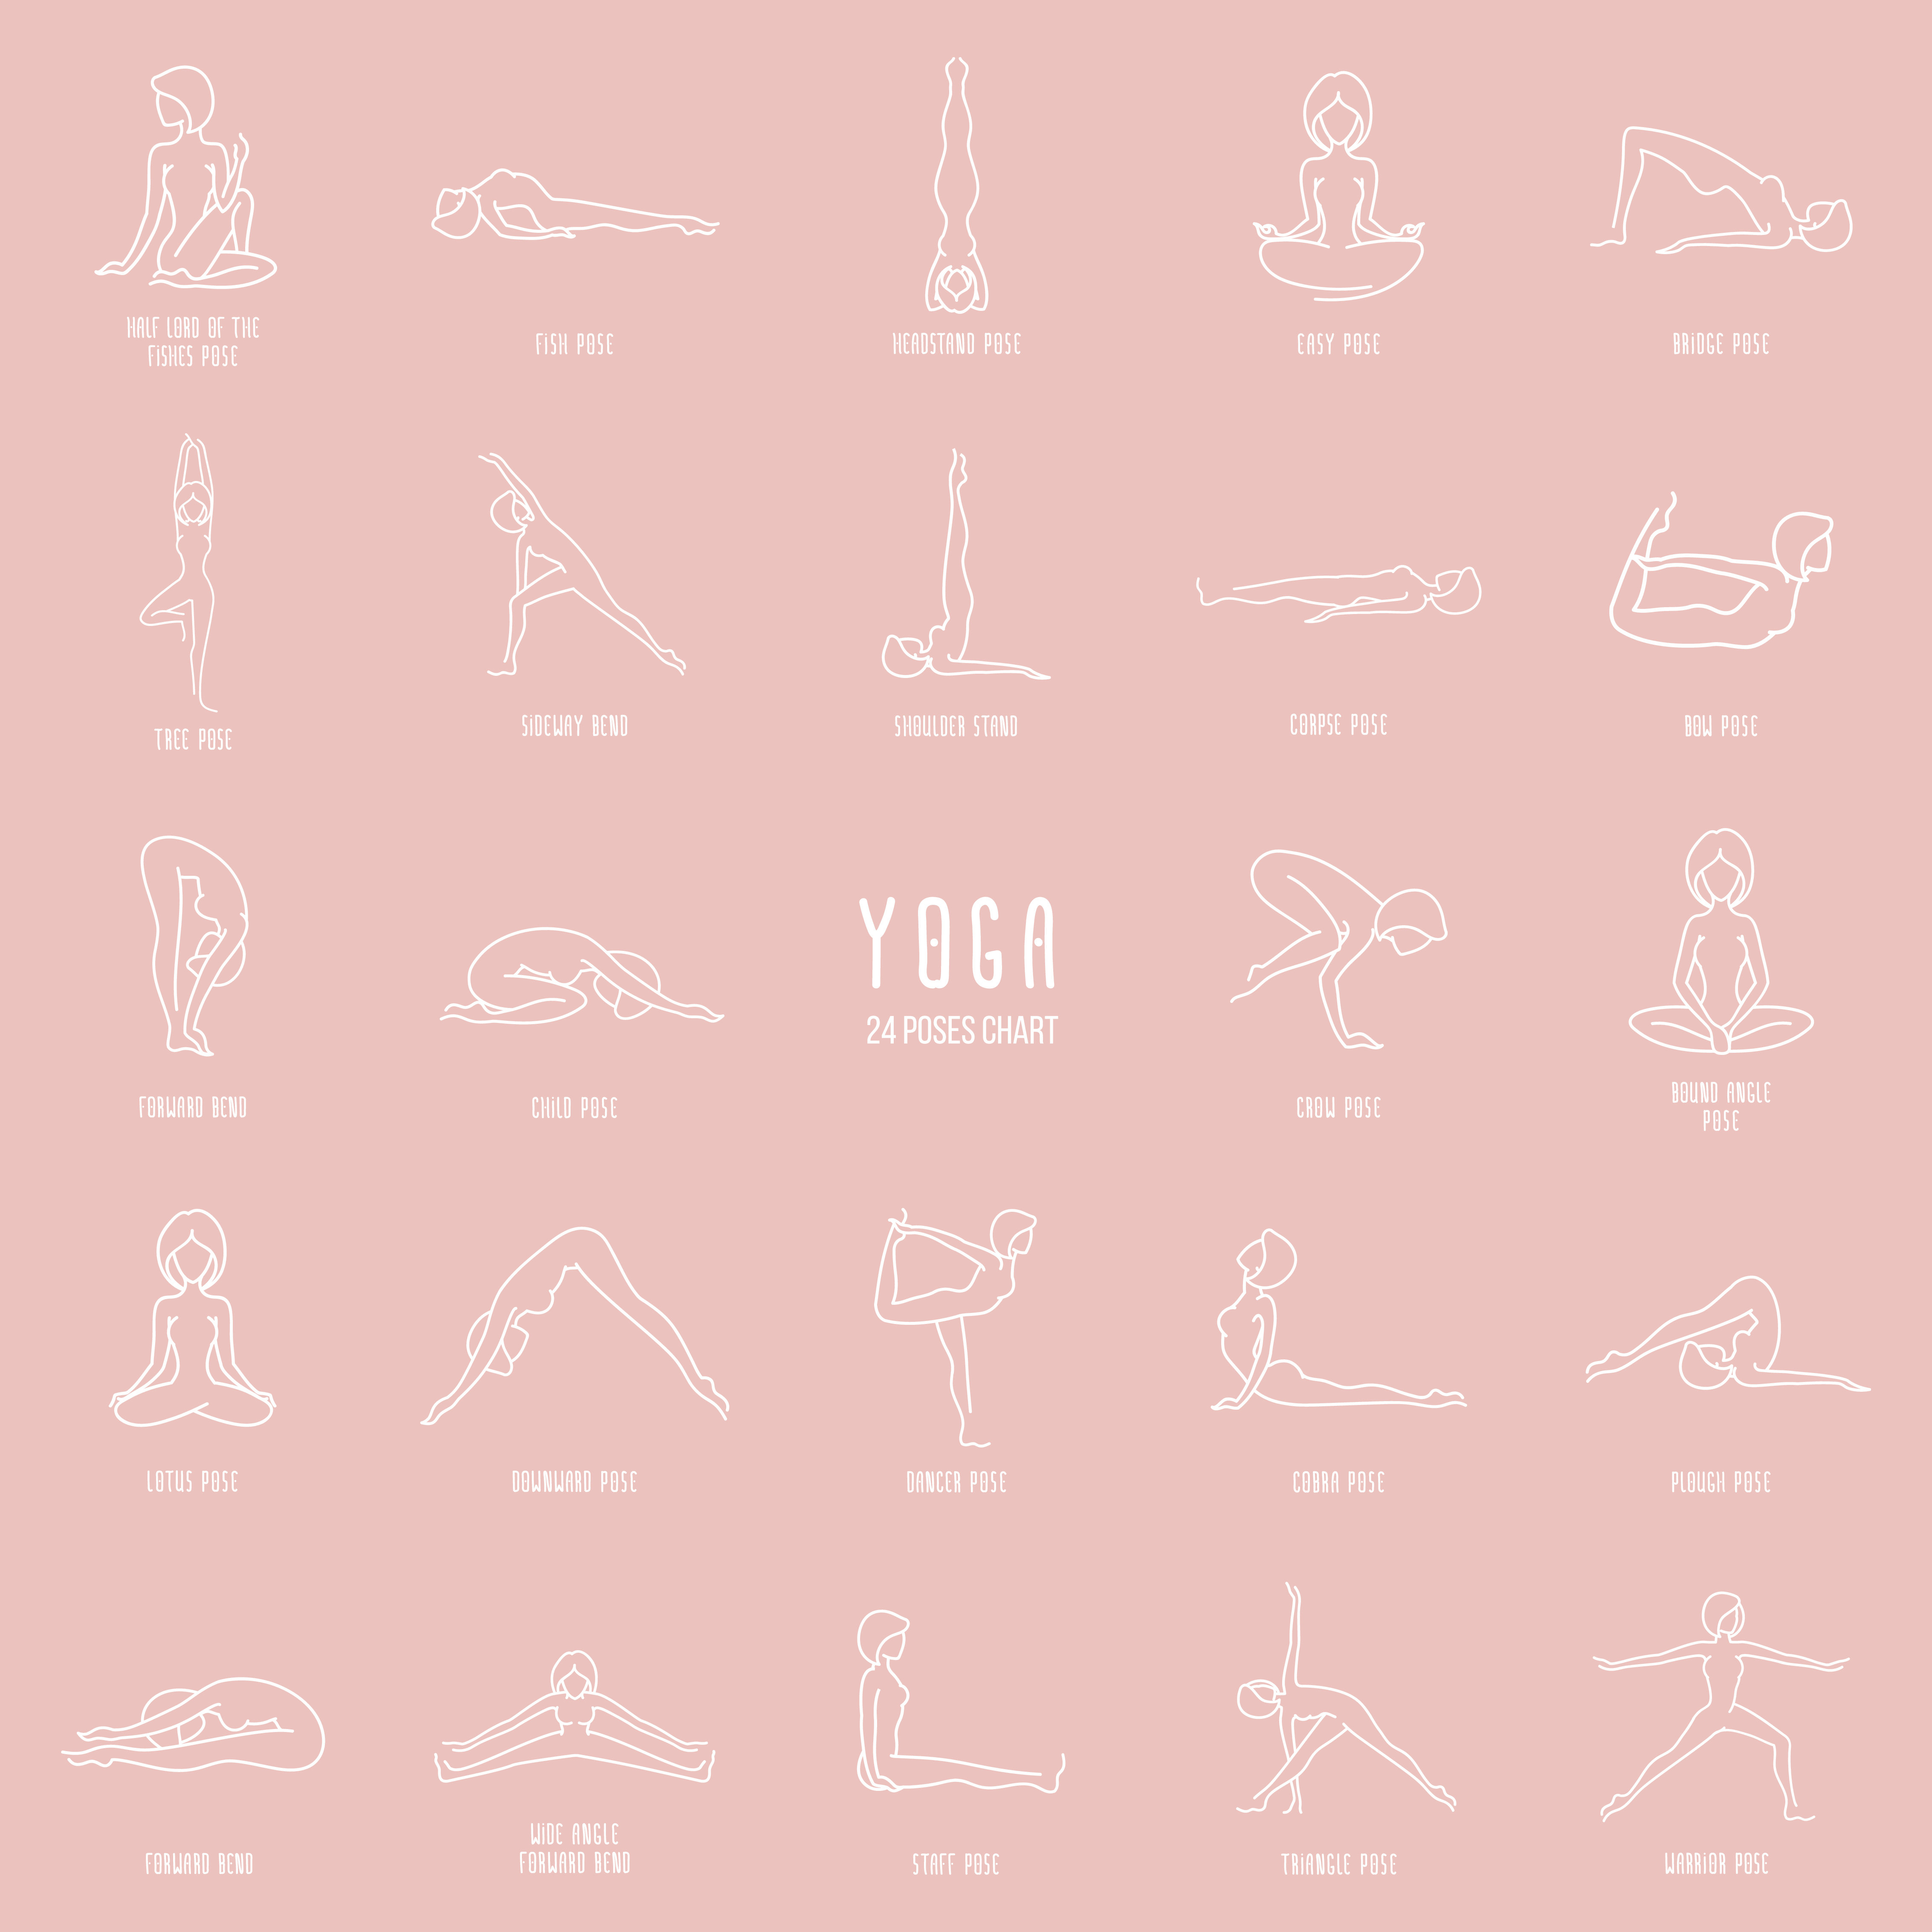 Update 118+ yoga poses chart